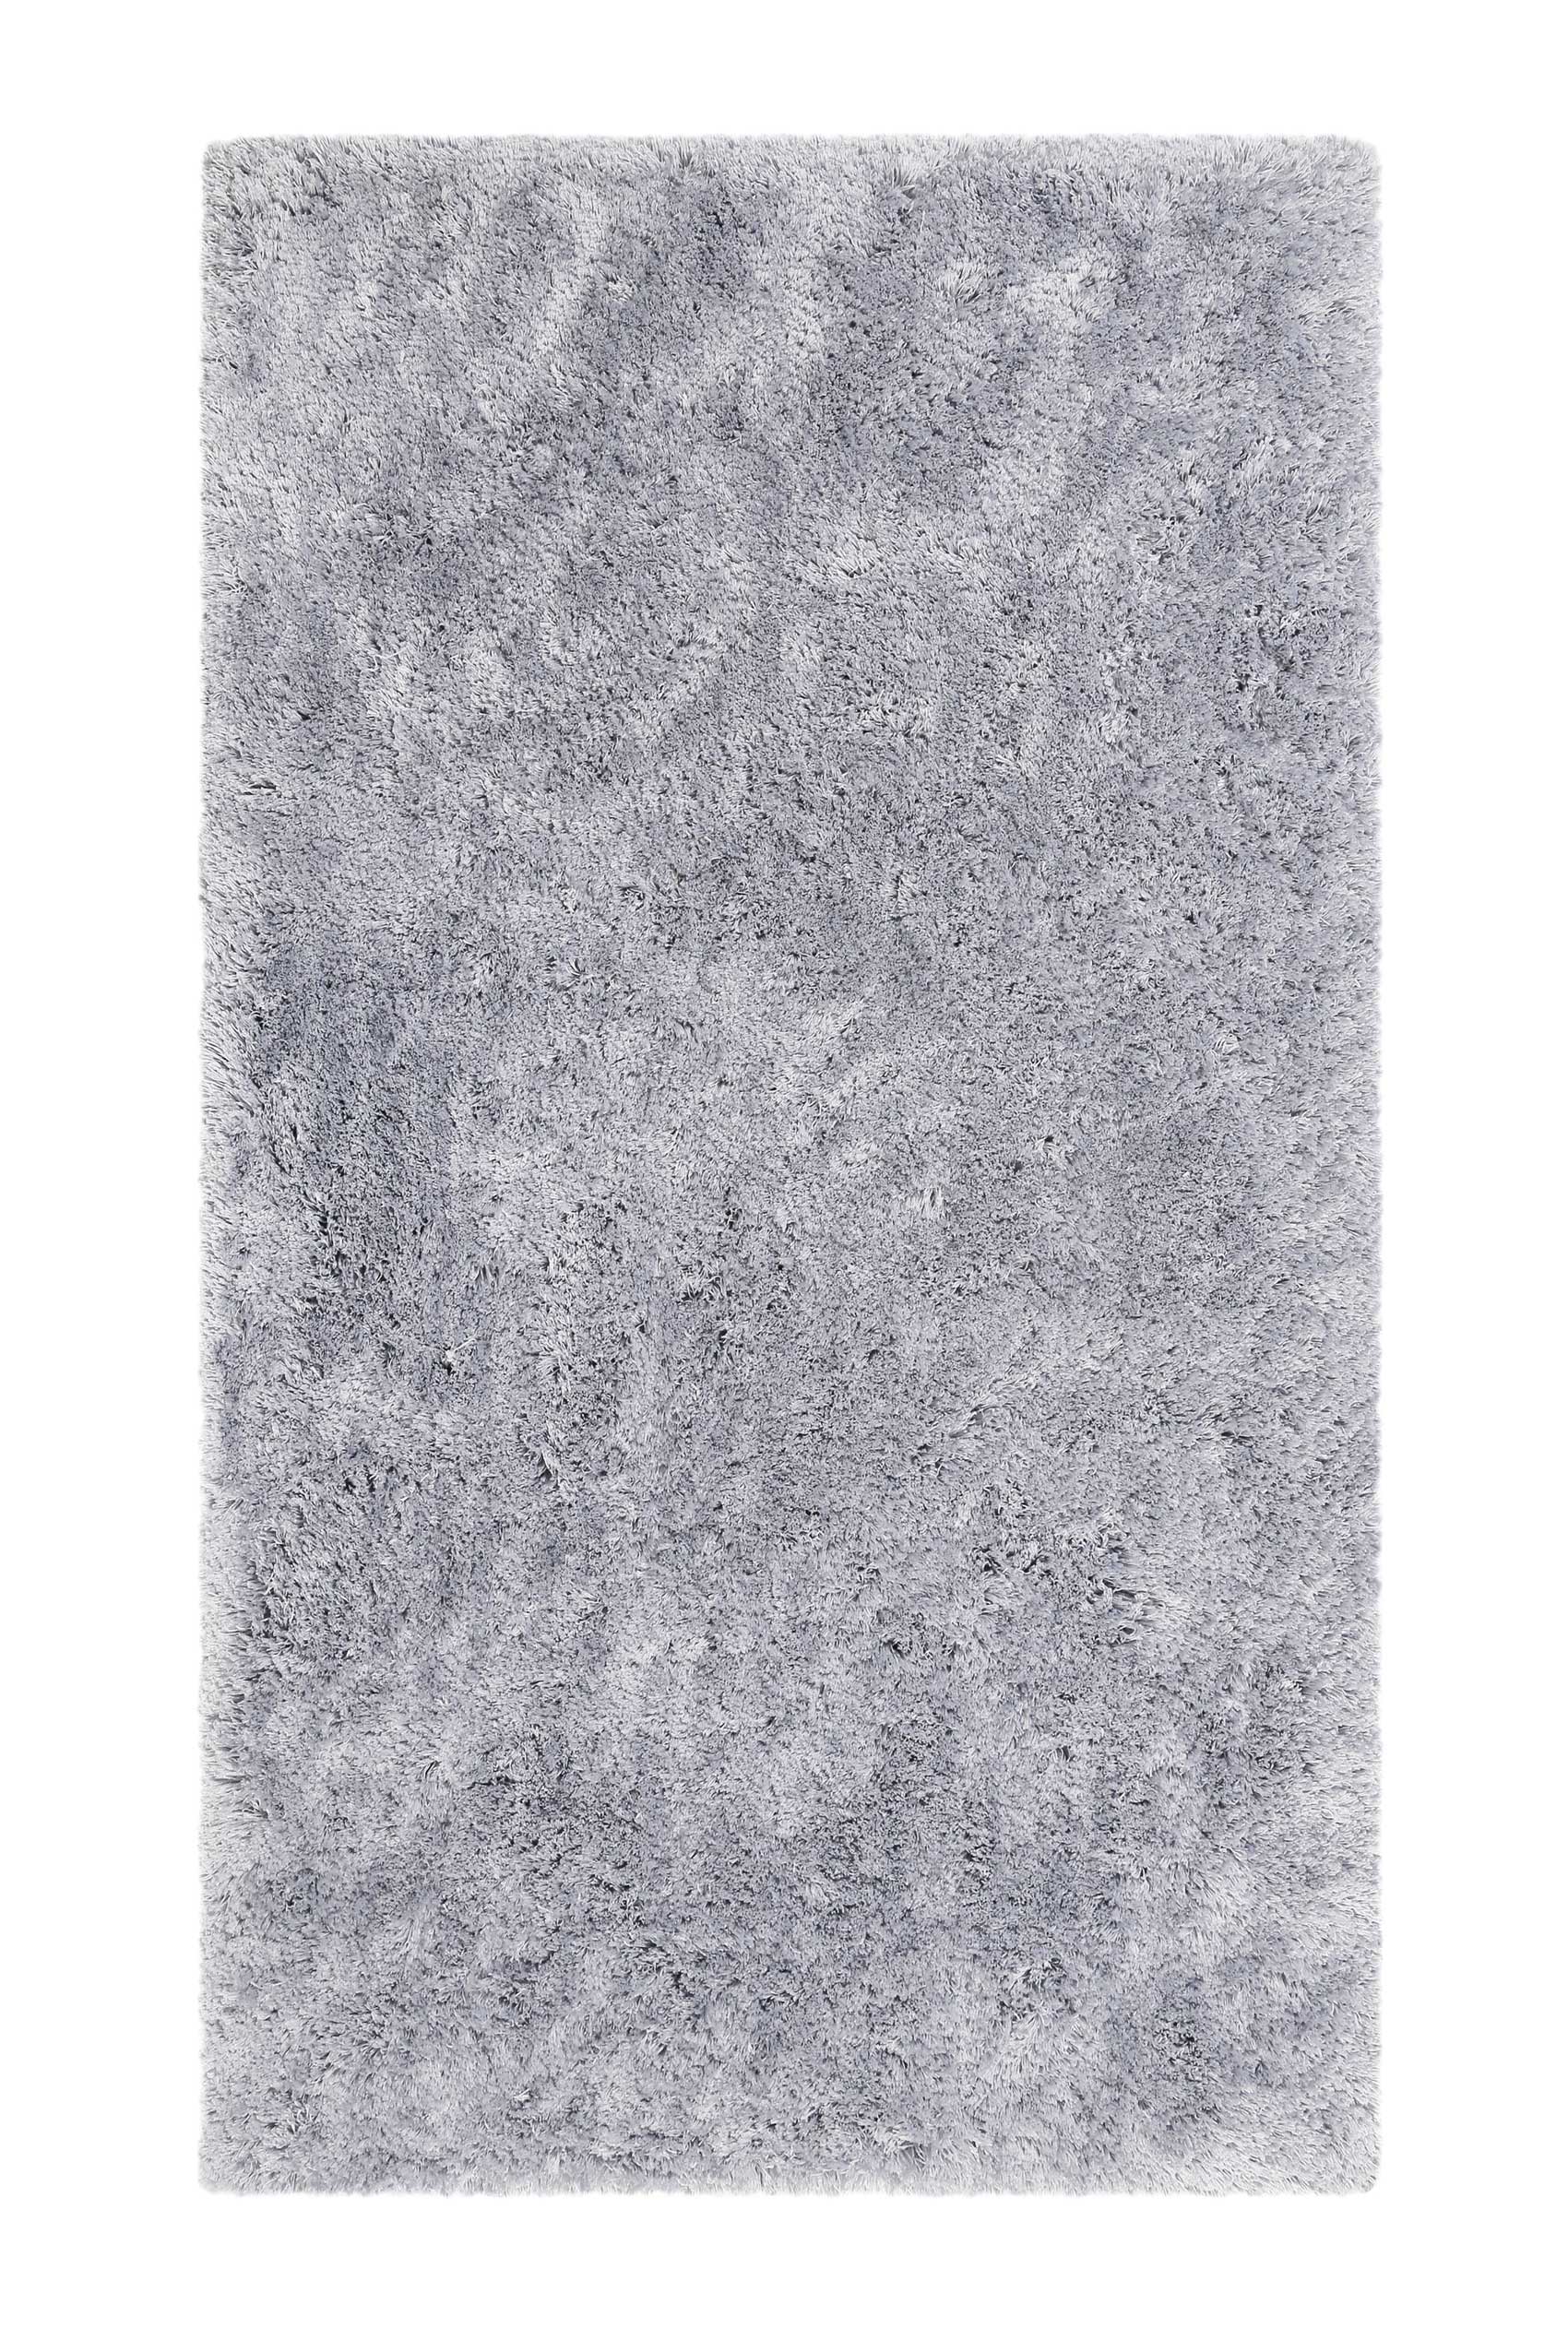 tapis de bain microfibre antidérapant gris clair 60x100